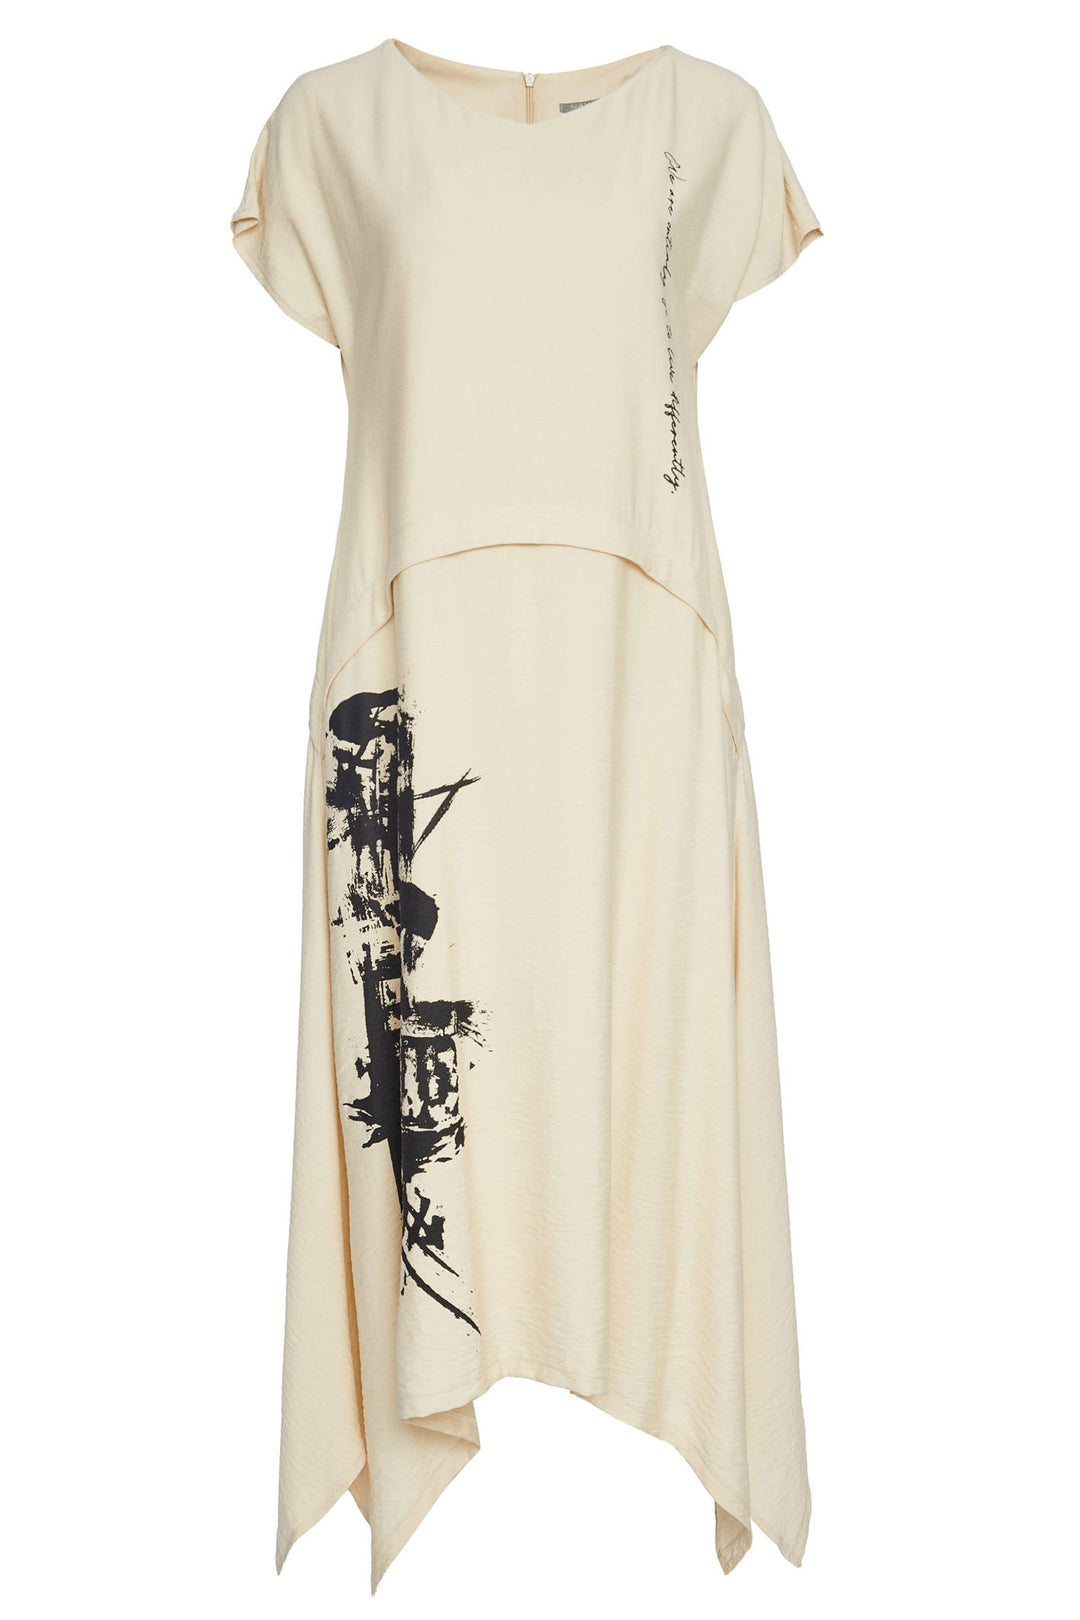 Naya NAS23 169 139 Stone & Black Print Dress